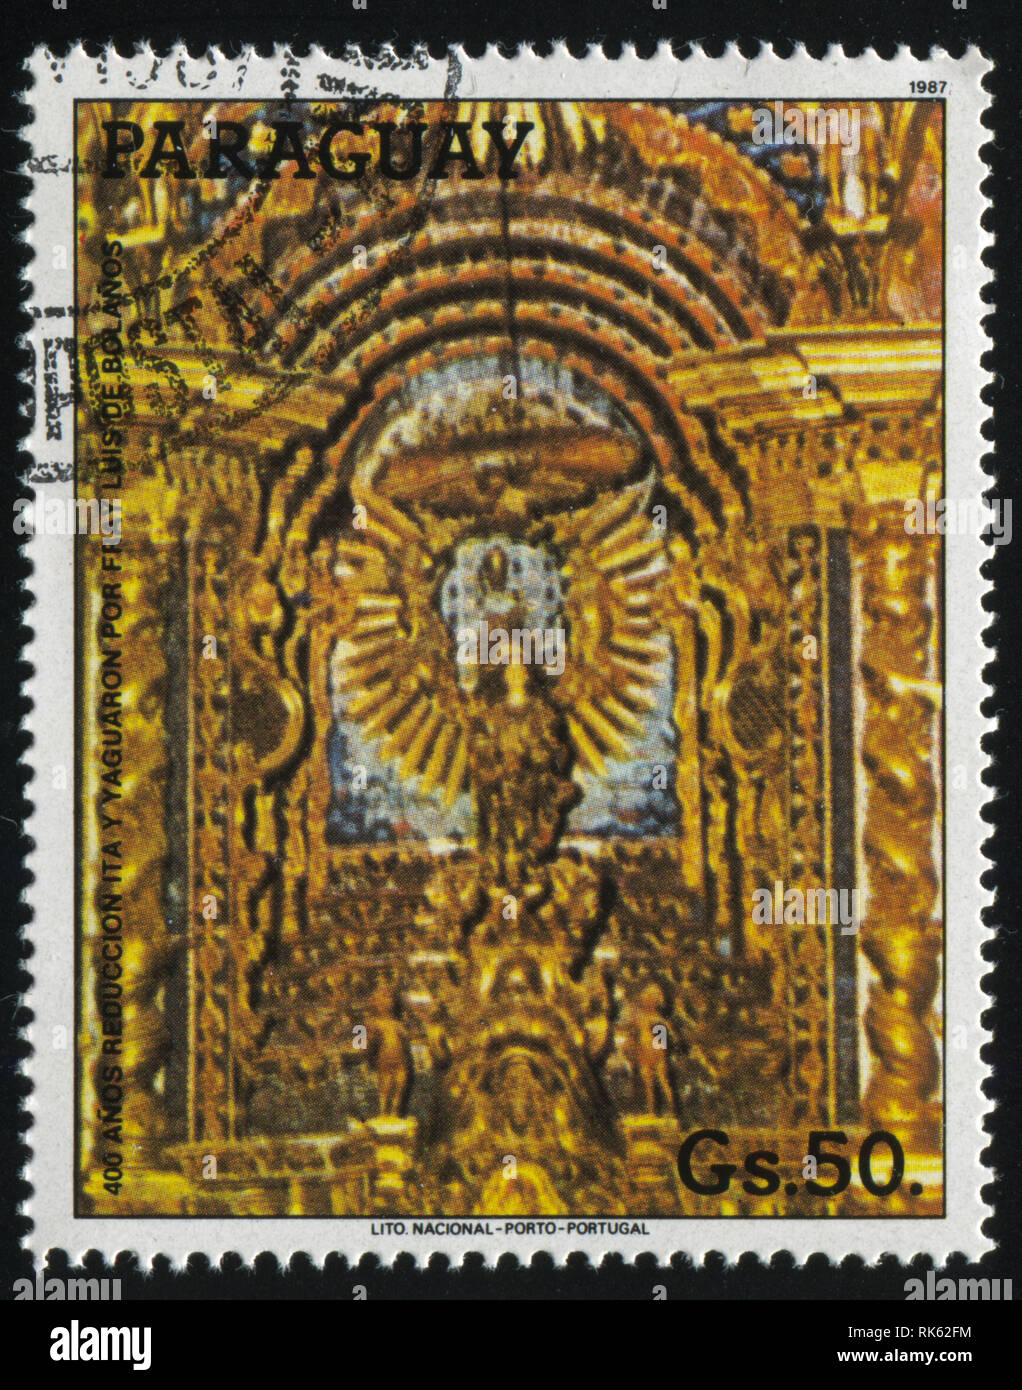 RUSSIA KALININGRAD, 19 APRIL 2017: stamp printed by Paraguay, shows Yaguaron Church altar, circa 1987 Stock Photo